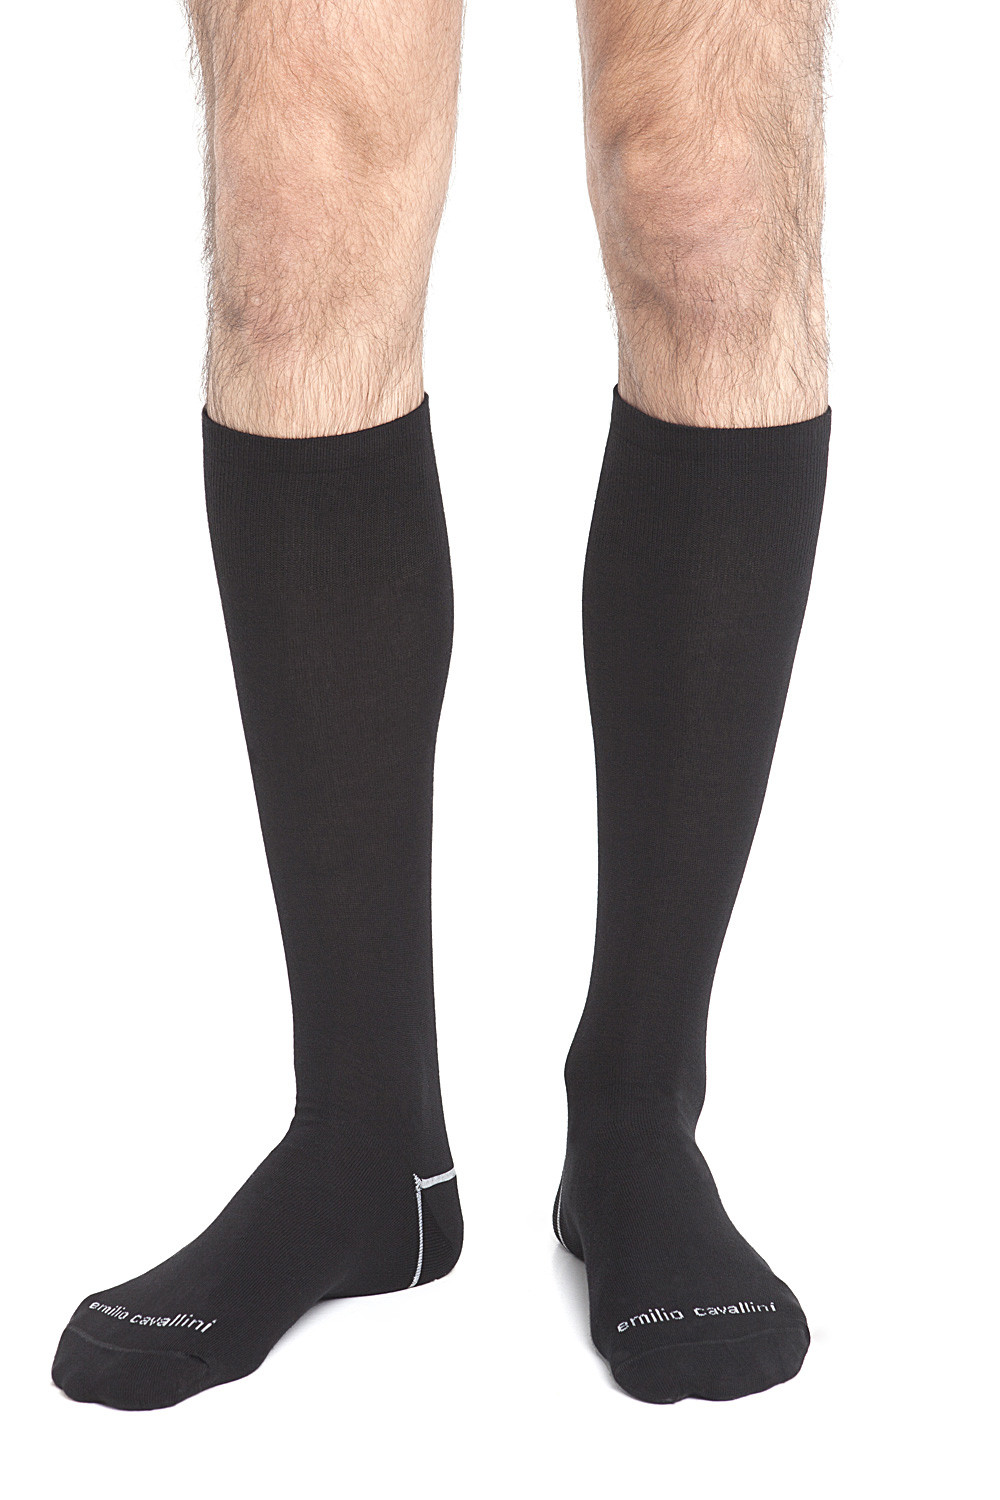 Men | Mantyhose tights for men, Megging leggings for men and socks ...